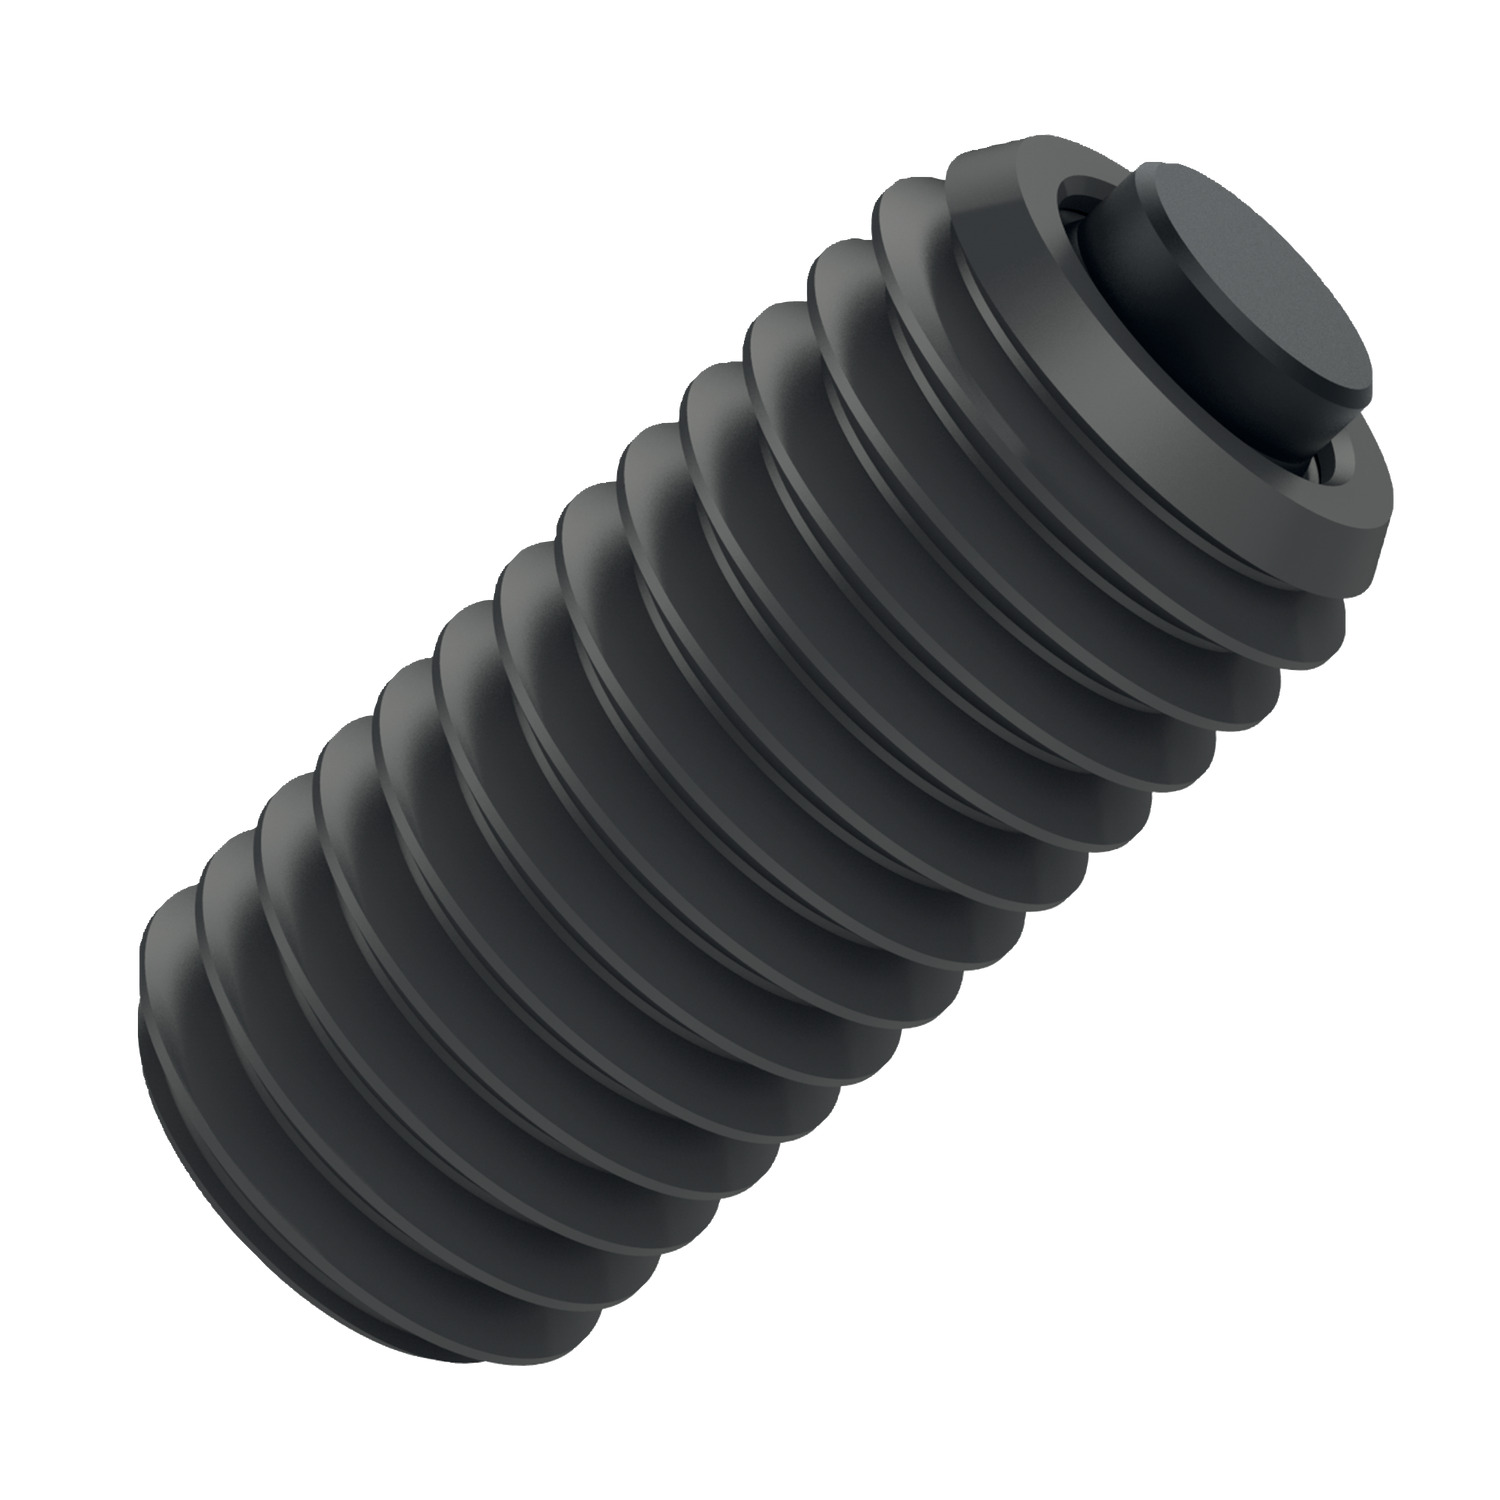 Product 35550.3, Grippers - Self Aligning - Plastic flat - set screw / 